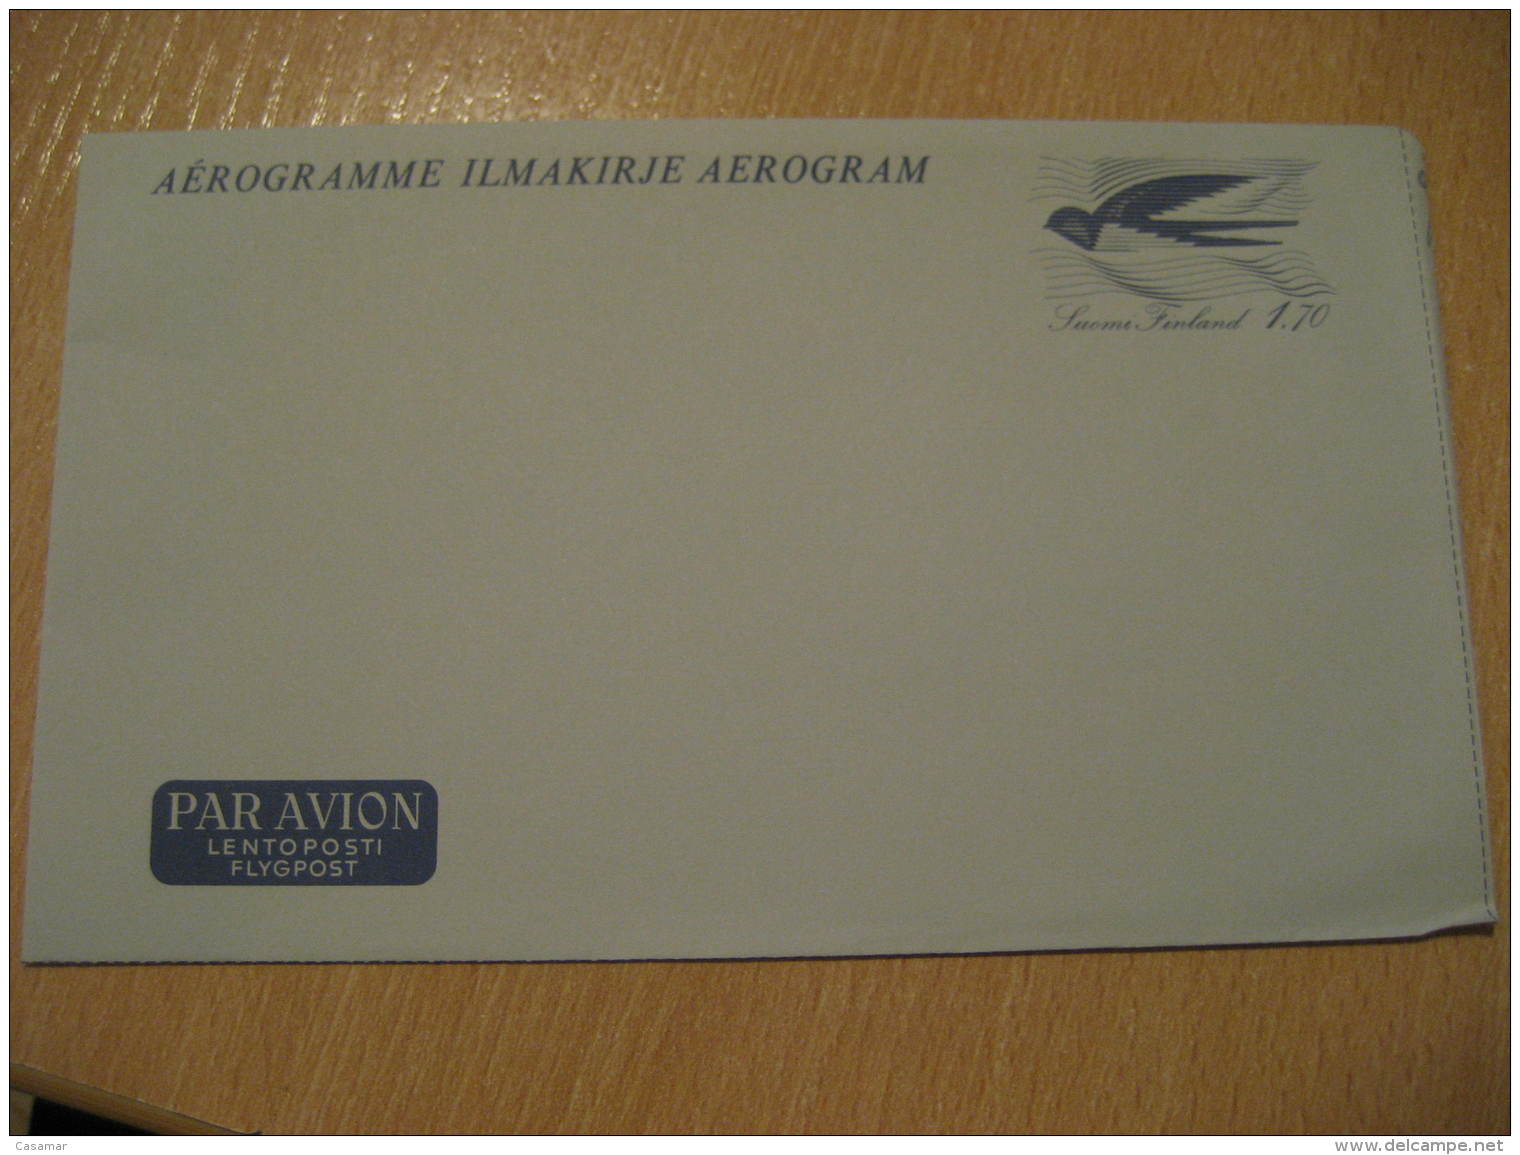 SWALLOW HIRONDELLE GOLONDRINA Swallows 1,70 Aerogramme Air Letter Finland - Golondrinas